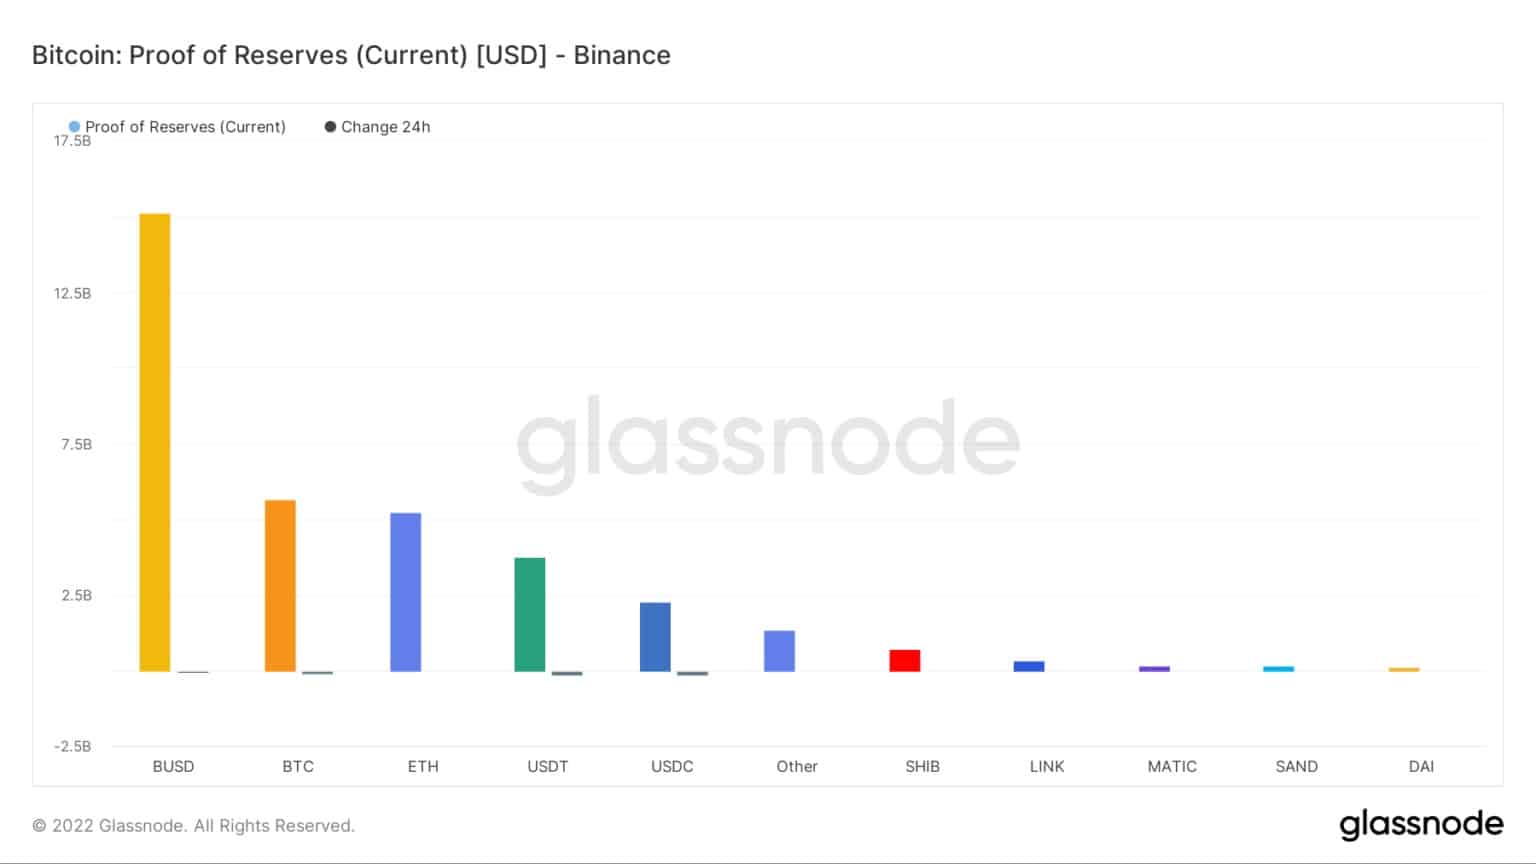 Prueba de reservas - Binance / Fuente: Glassnode